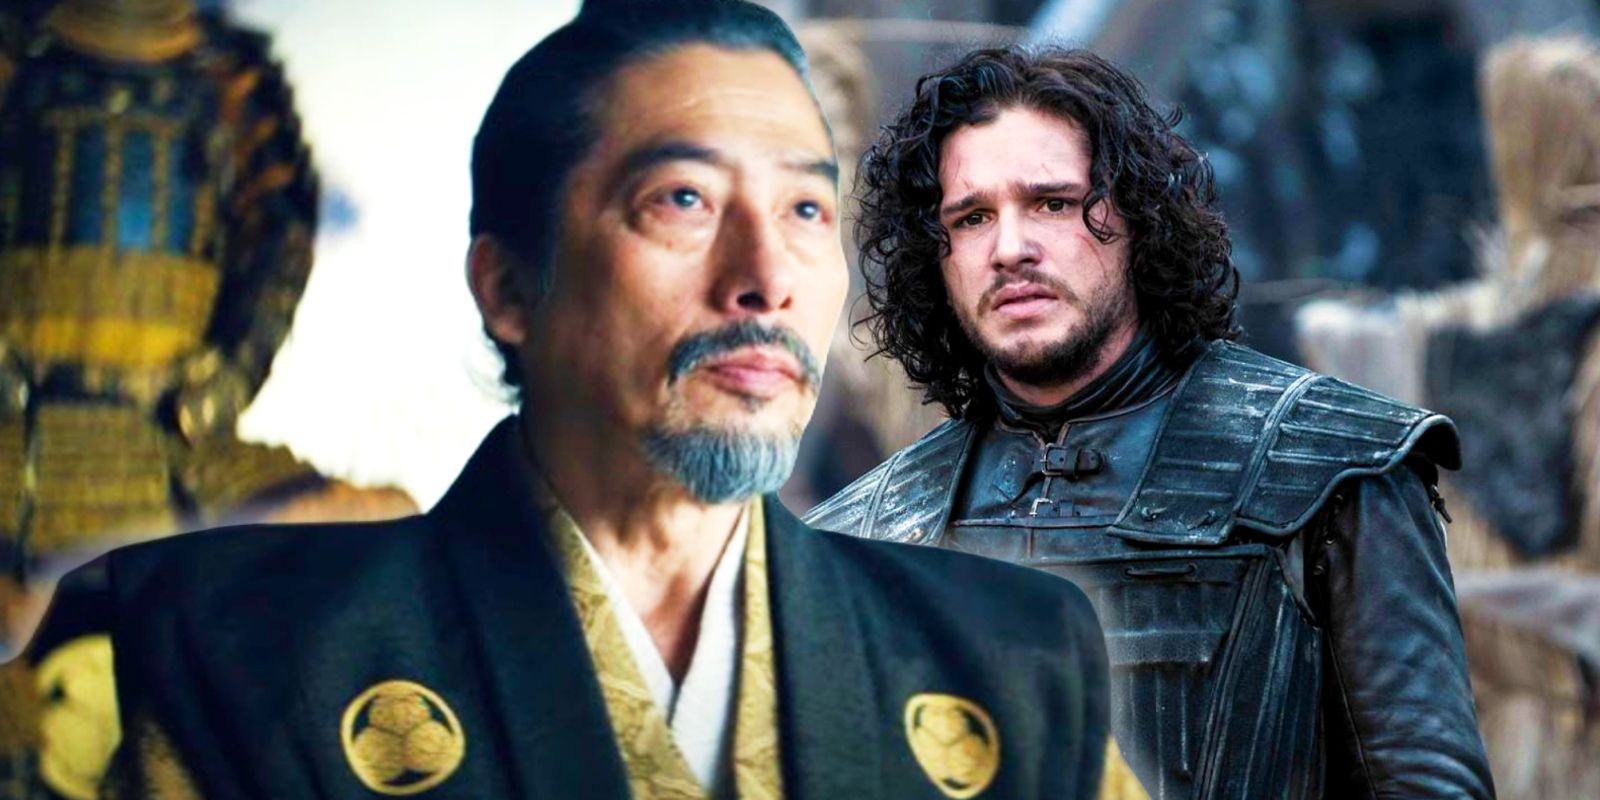 Hiroyuki Sanada em Shogun justaposto a Kit Harington como Jon Snow em Game of Thrones